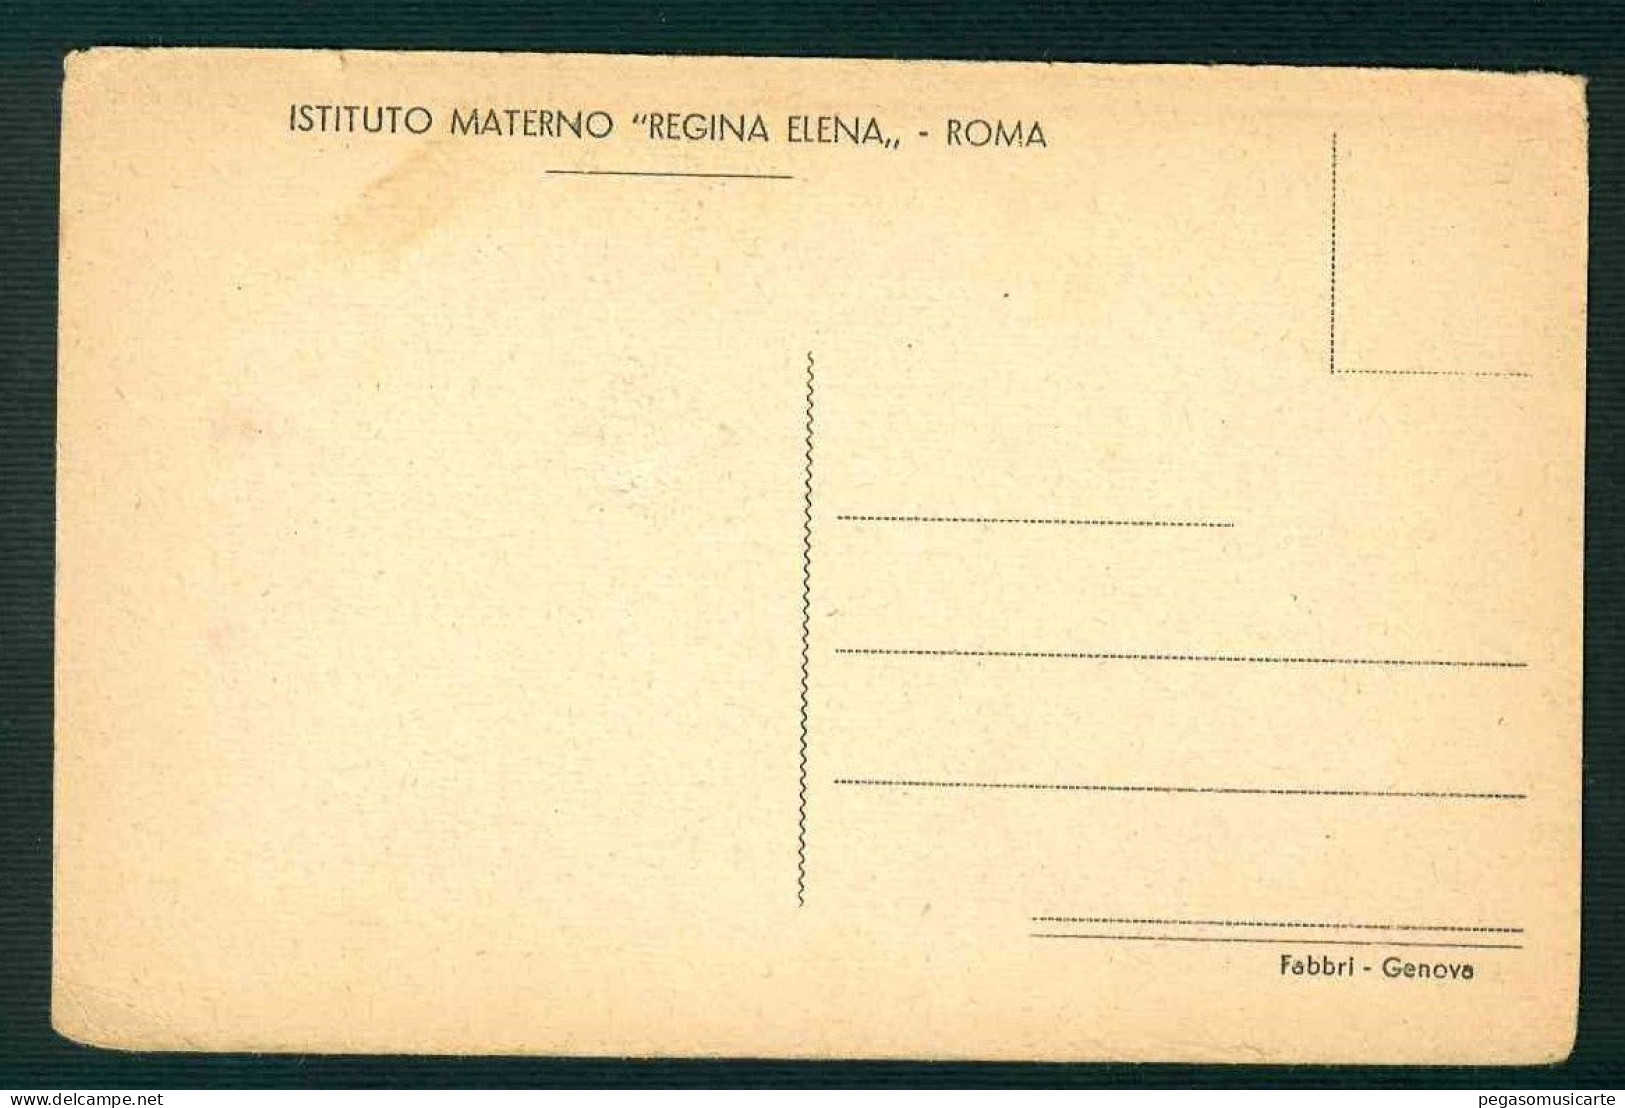 BA298 - ISTITUTO MATERNO REGINA ELENA - ROMA - CAMERA PARTICOLARE 1930 CIRCA - Education, Schools And Universities